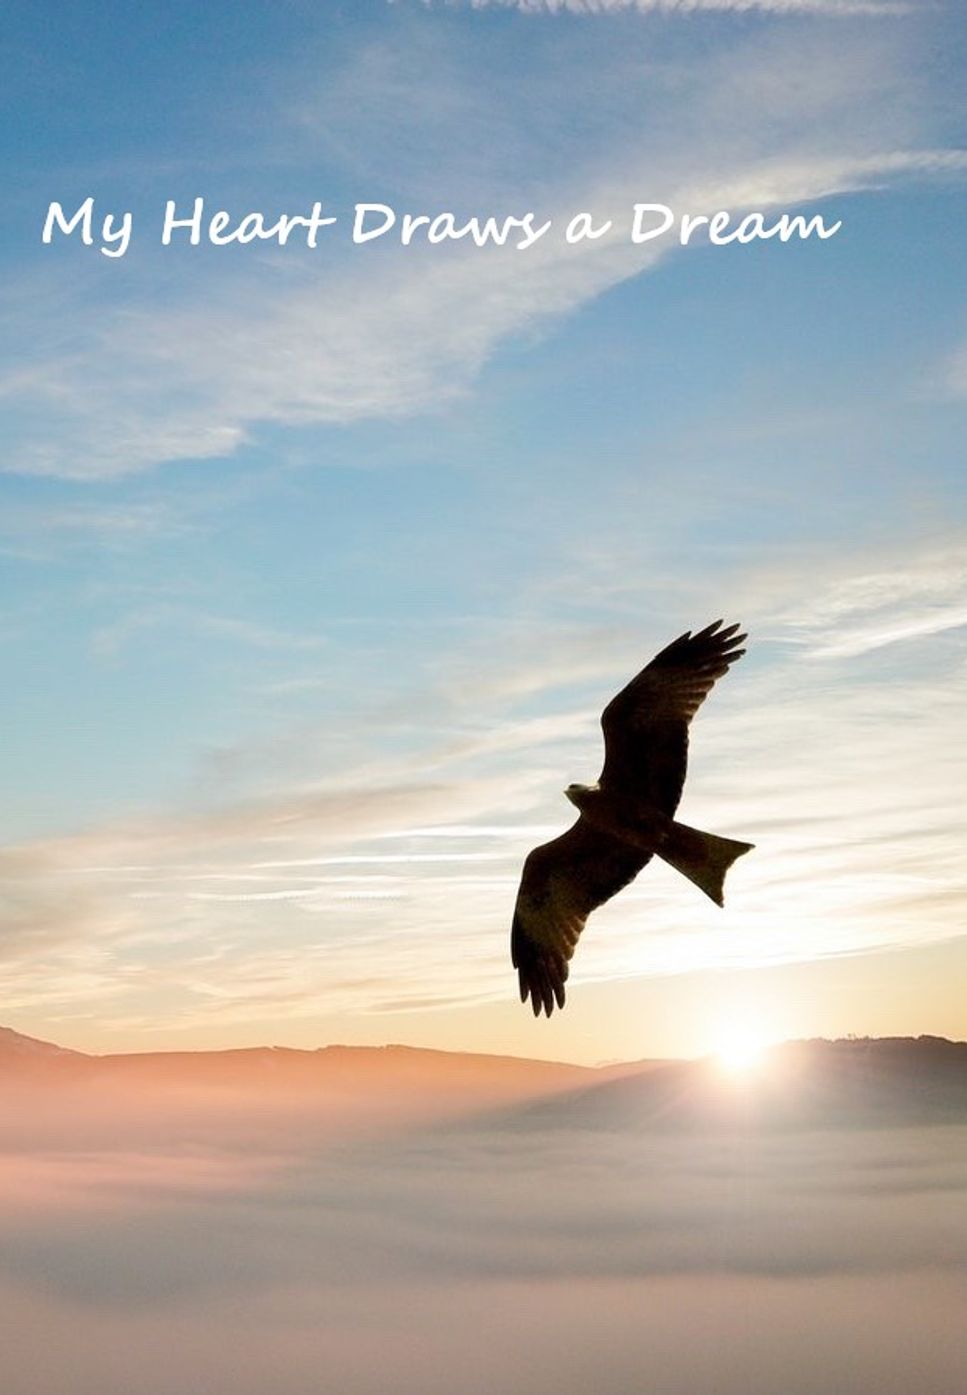 L'Arc~en~Ciel - My Heart Draws a Dream (Violin Guitar Trio) by Steven's Strings Studio